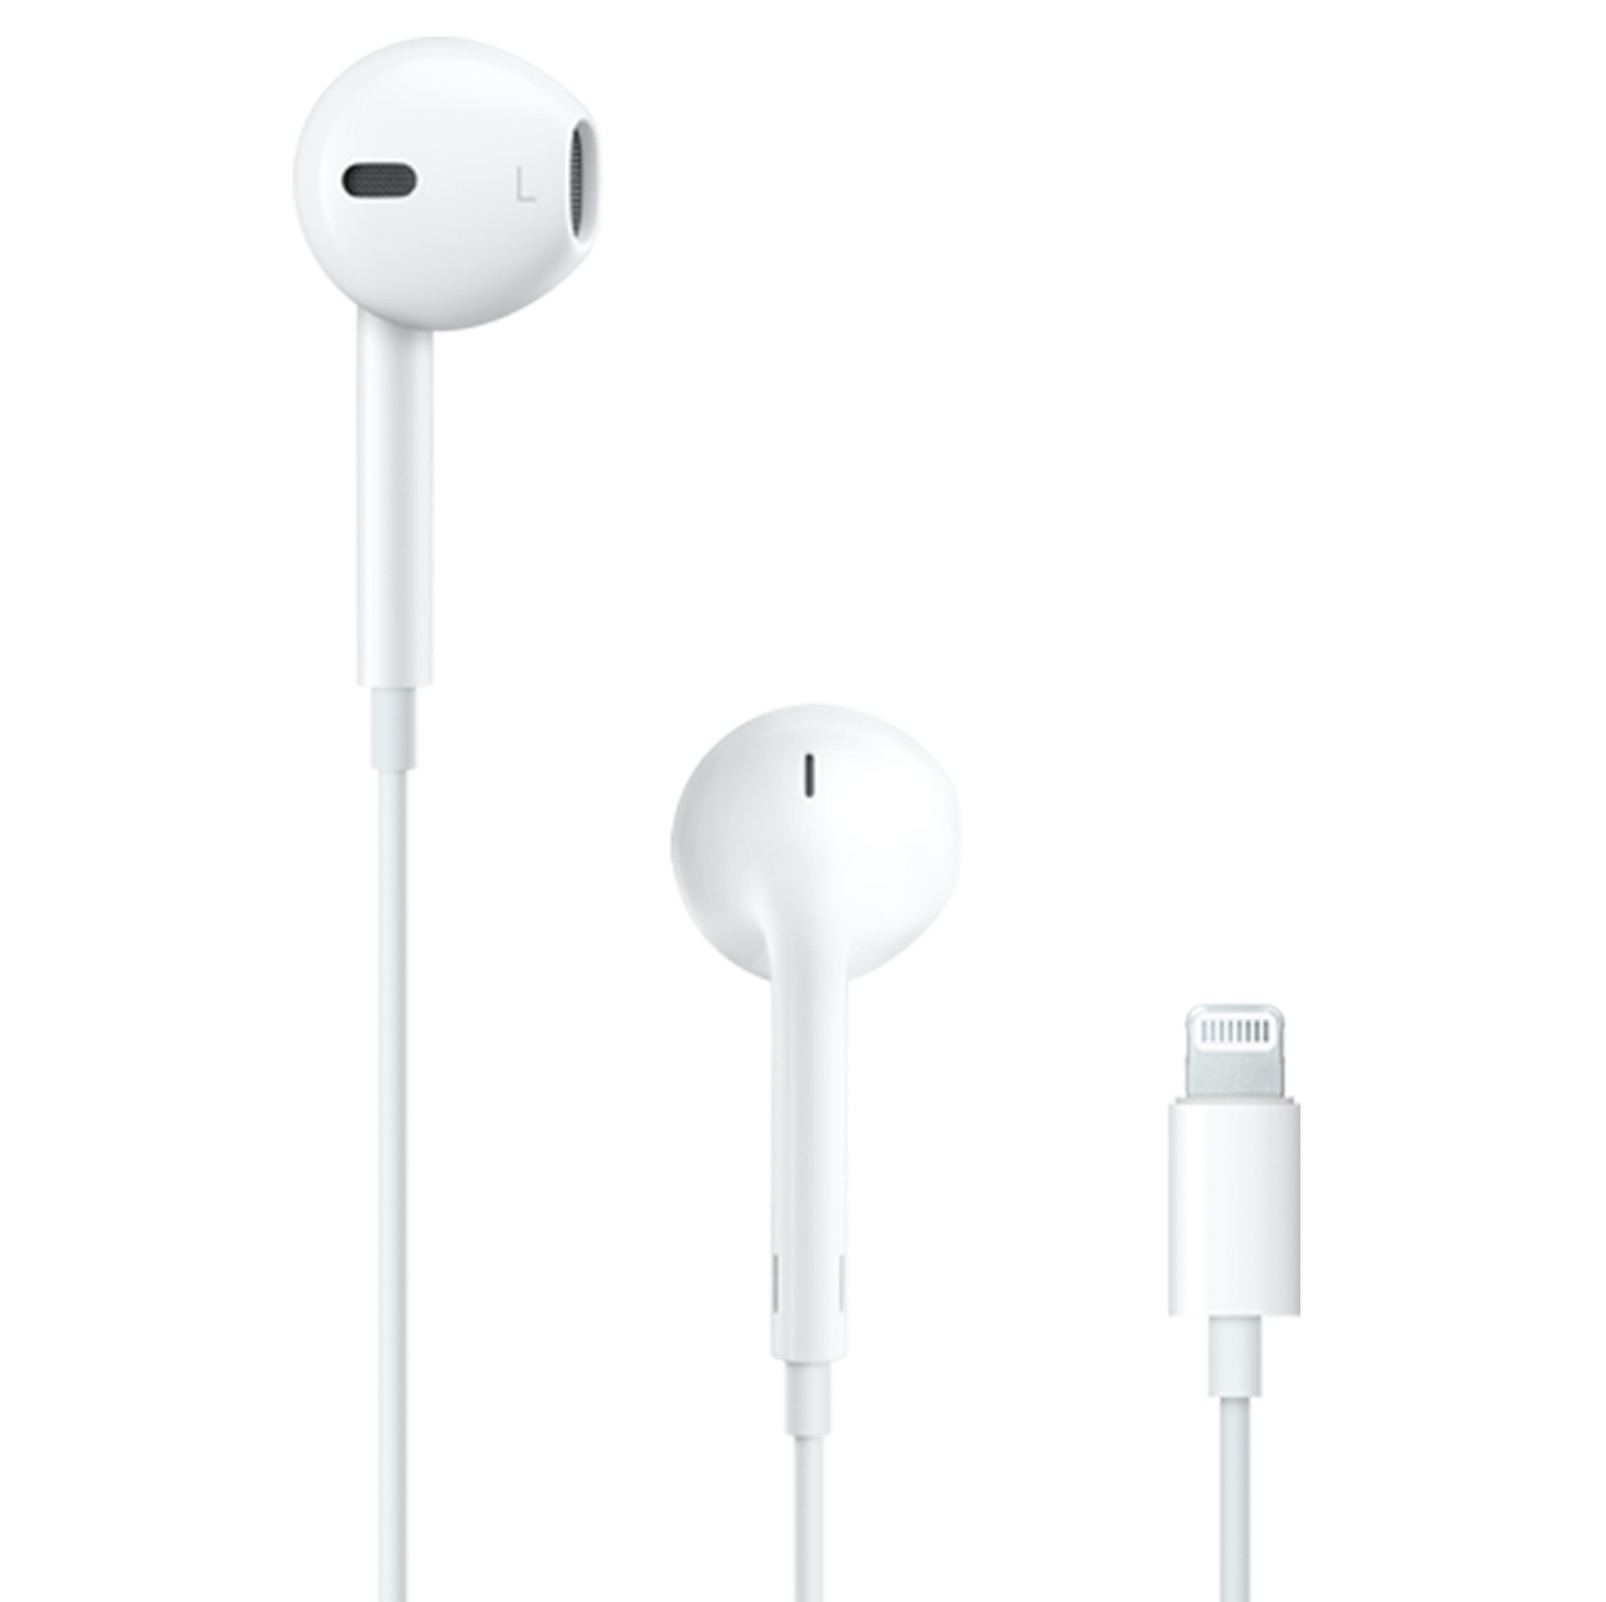 iOS 14.2代码表明iPhone 12不再随机附赠EarPods，售价可以更低